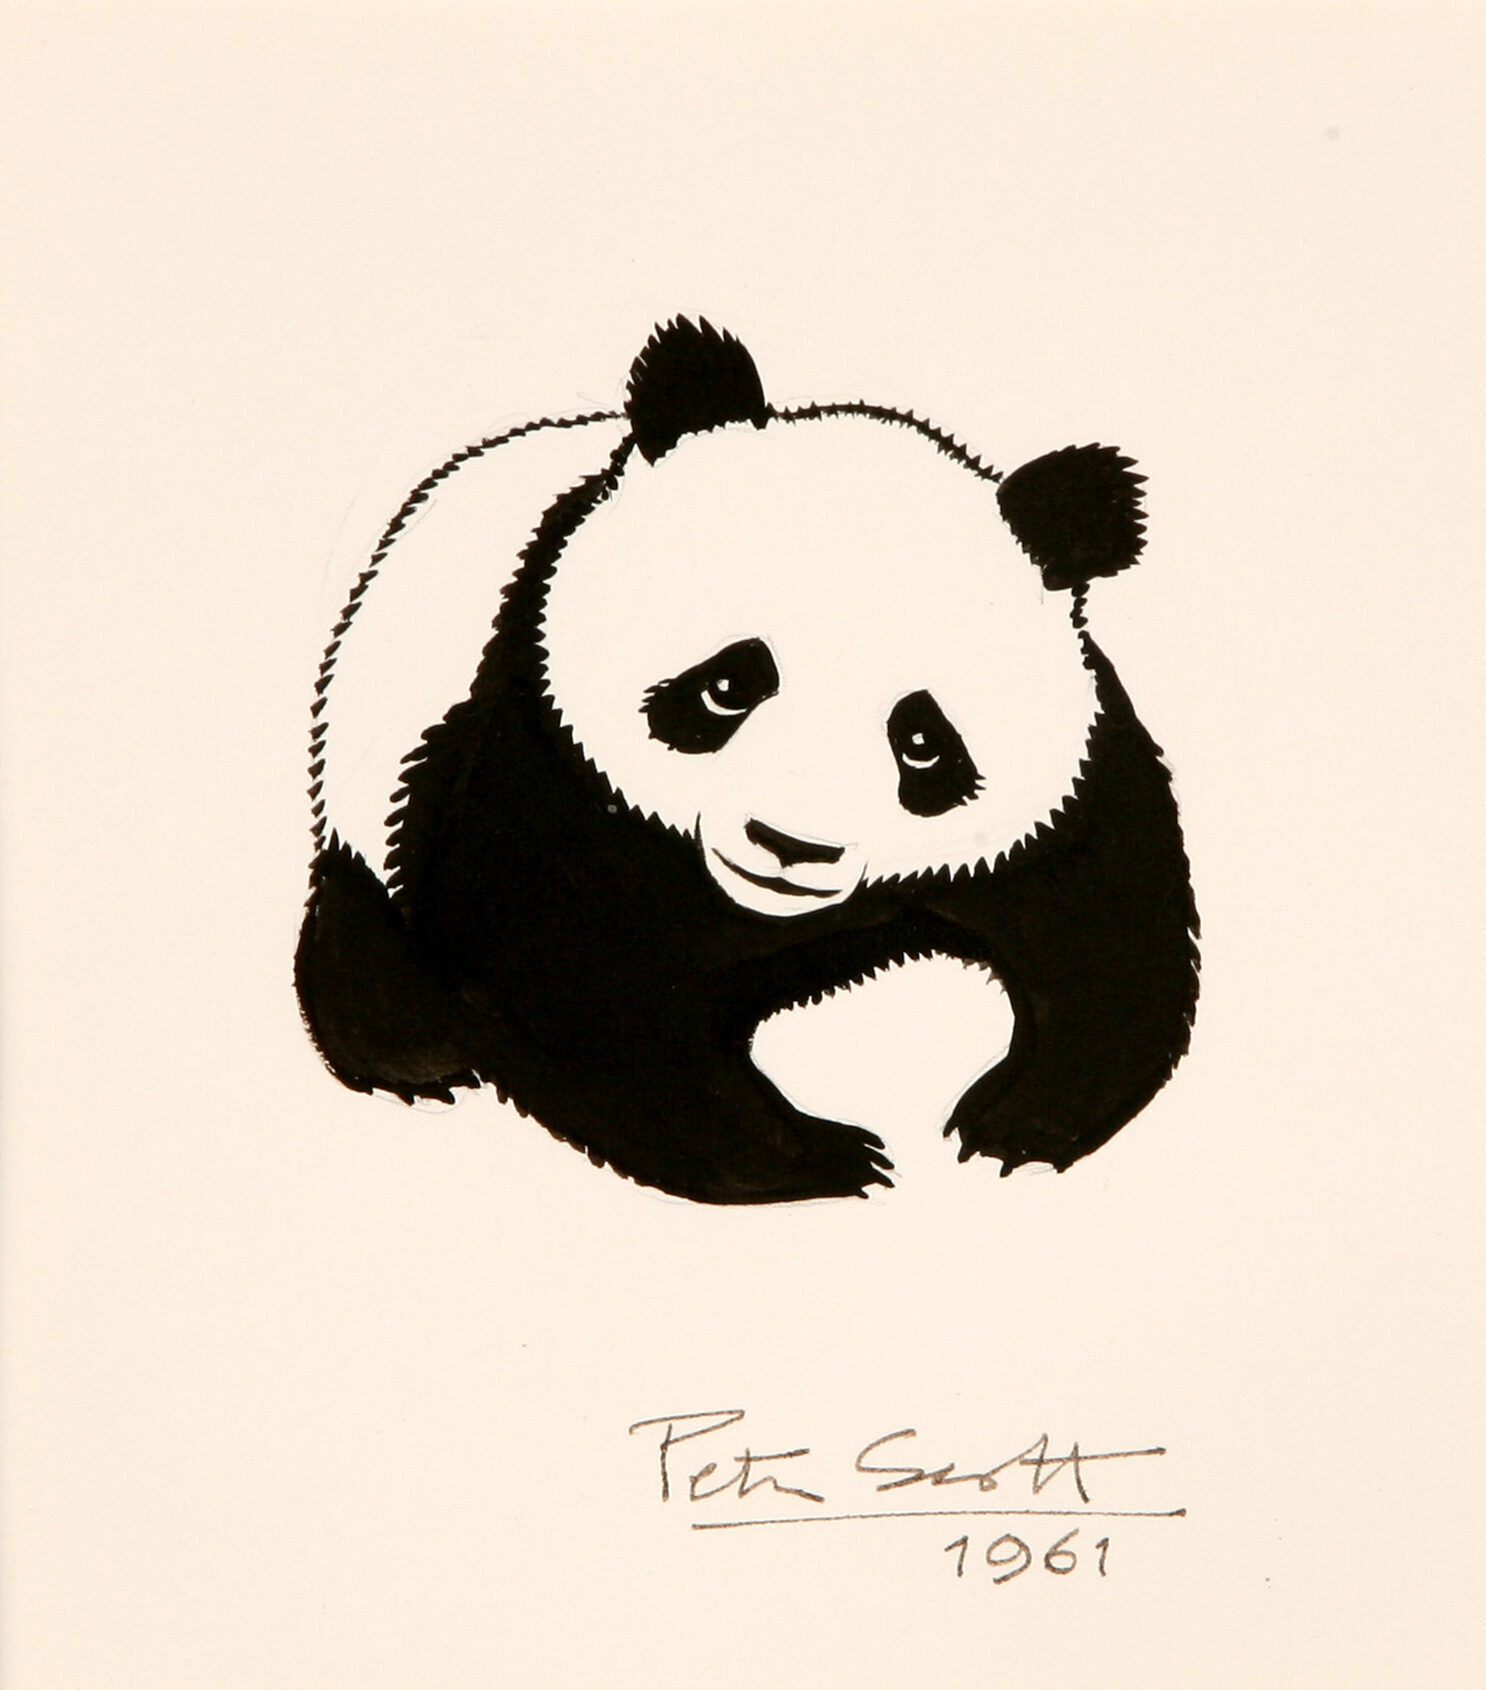   Giant Panda WWF Logo ink drawing by Sir Peter Scott  © Courtesy Dafila Scott